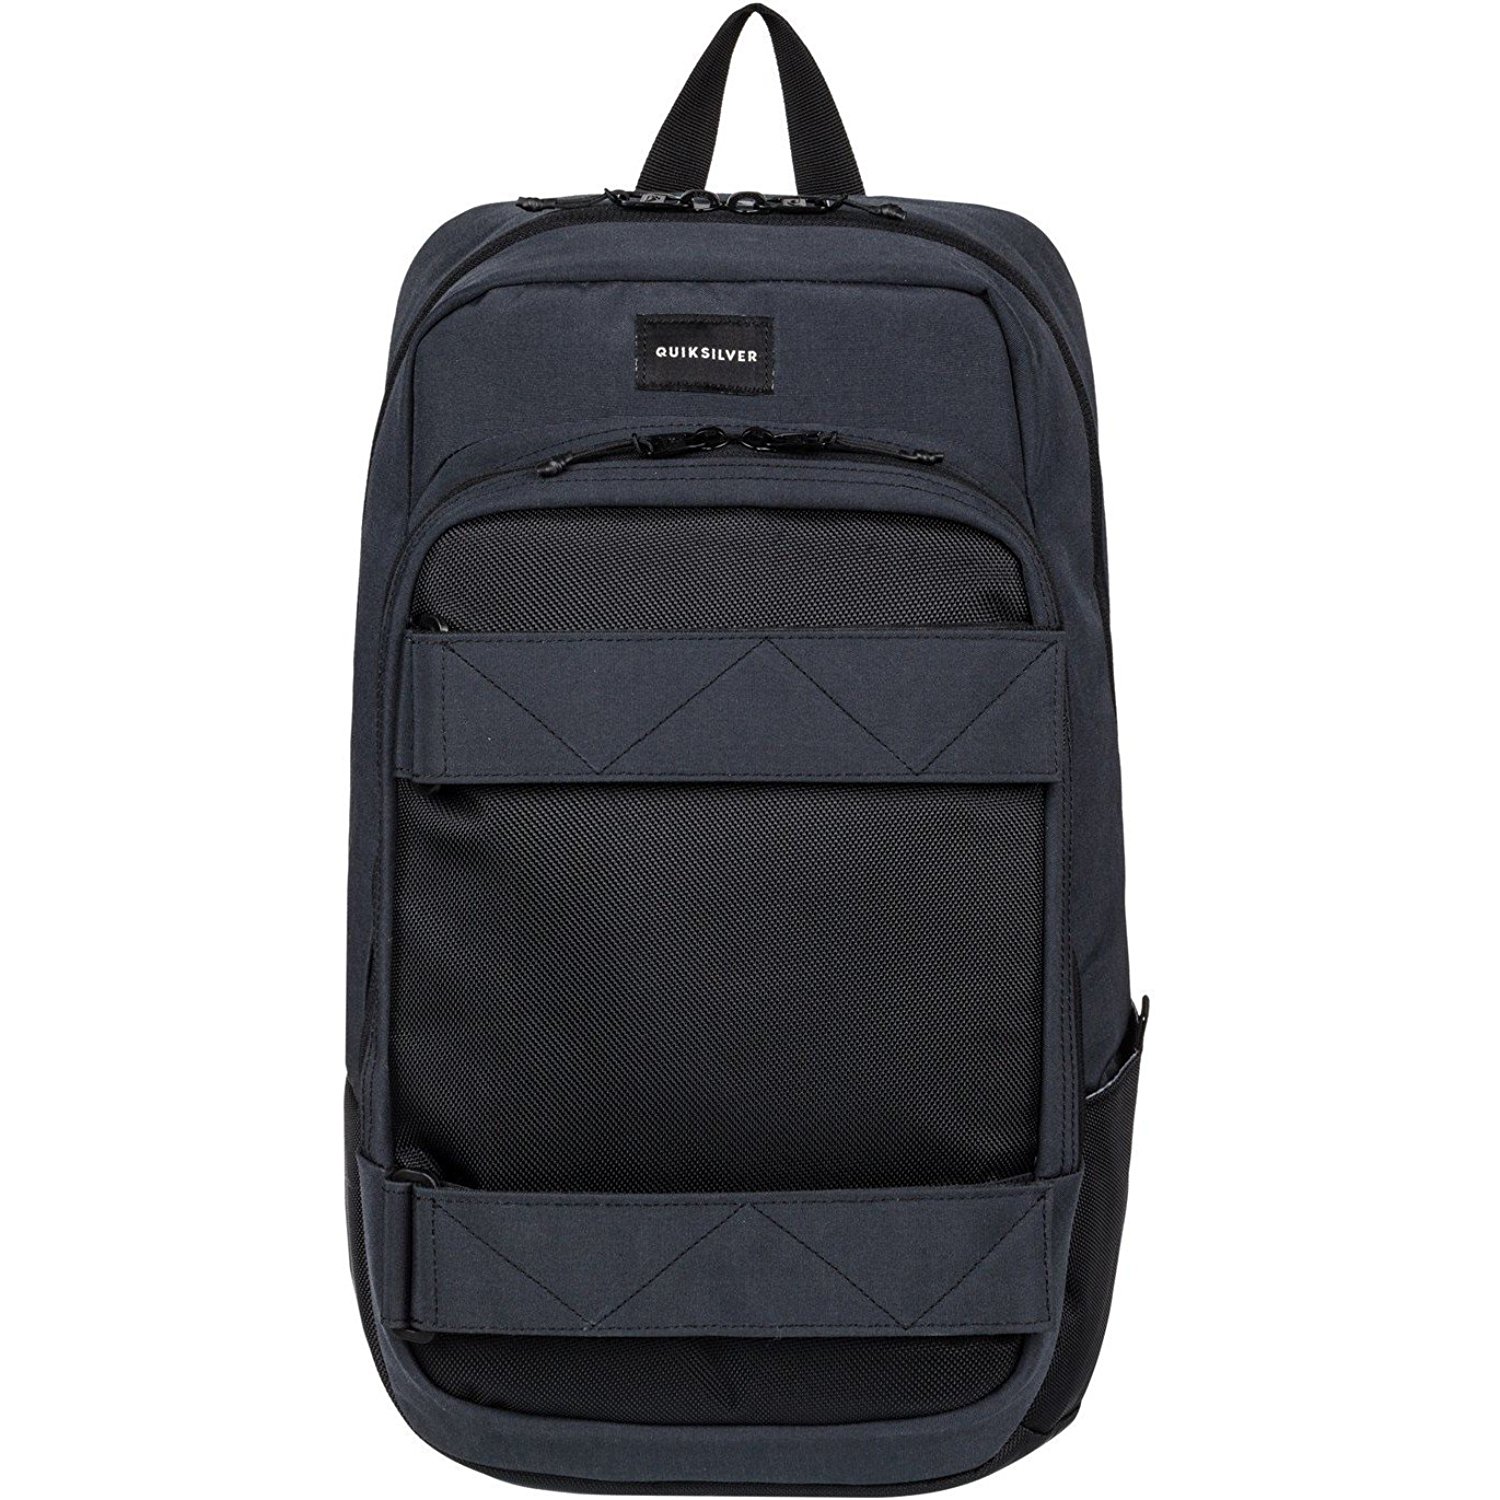 Backpack - 1500x1500 Wallpaper - teahub.io